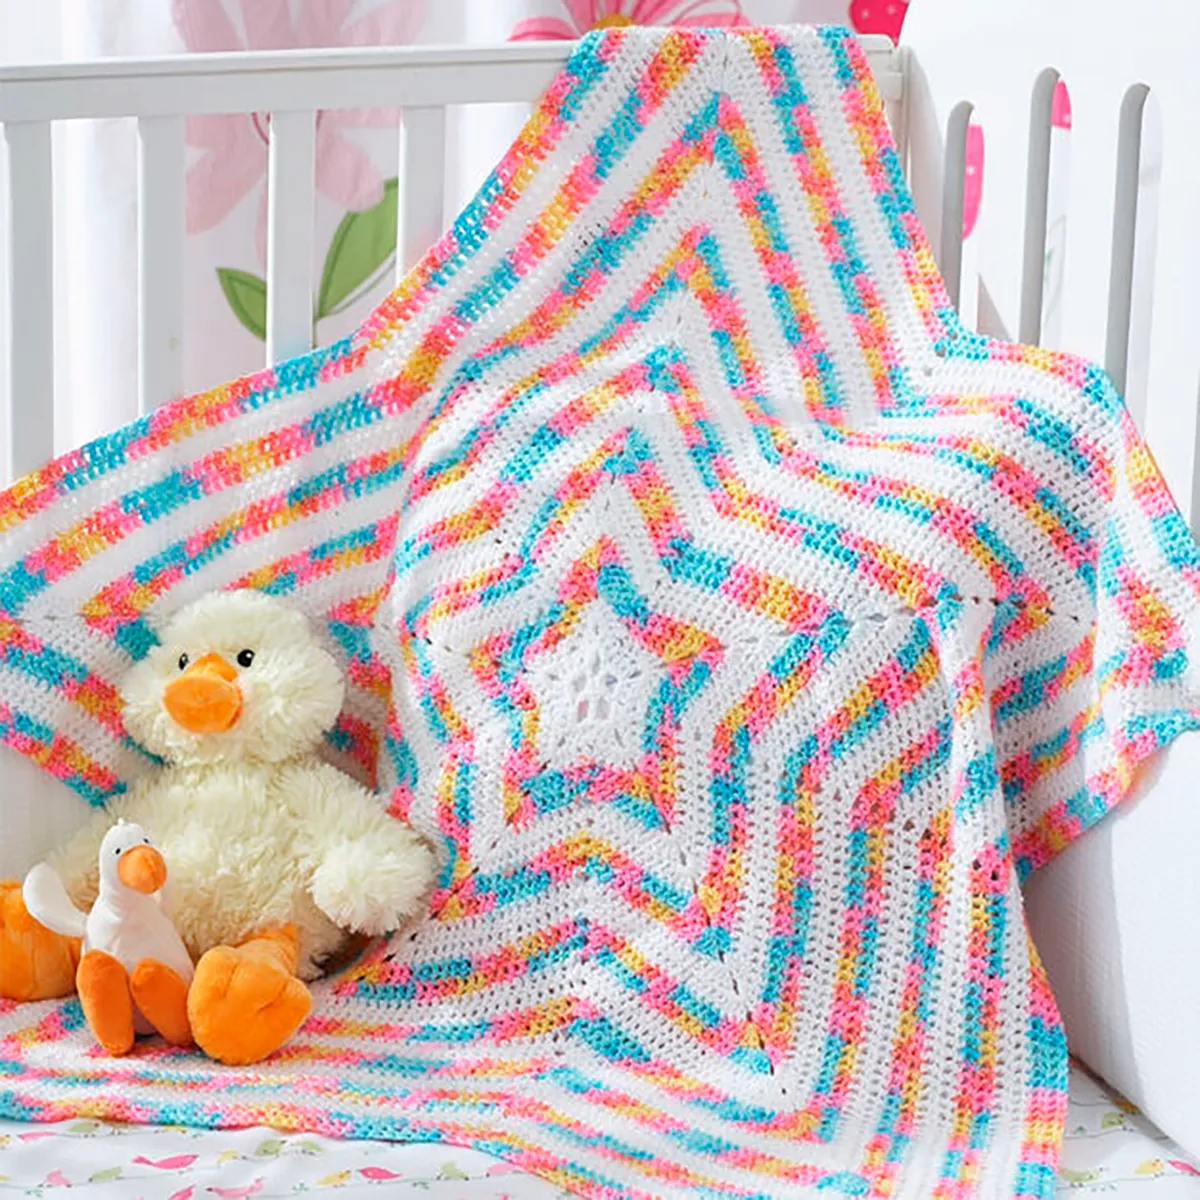 crochet star baby blanket pattern